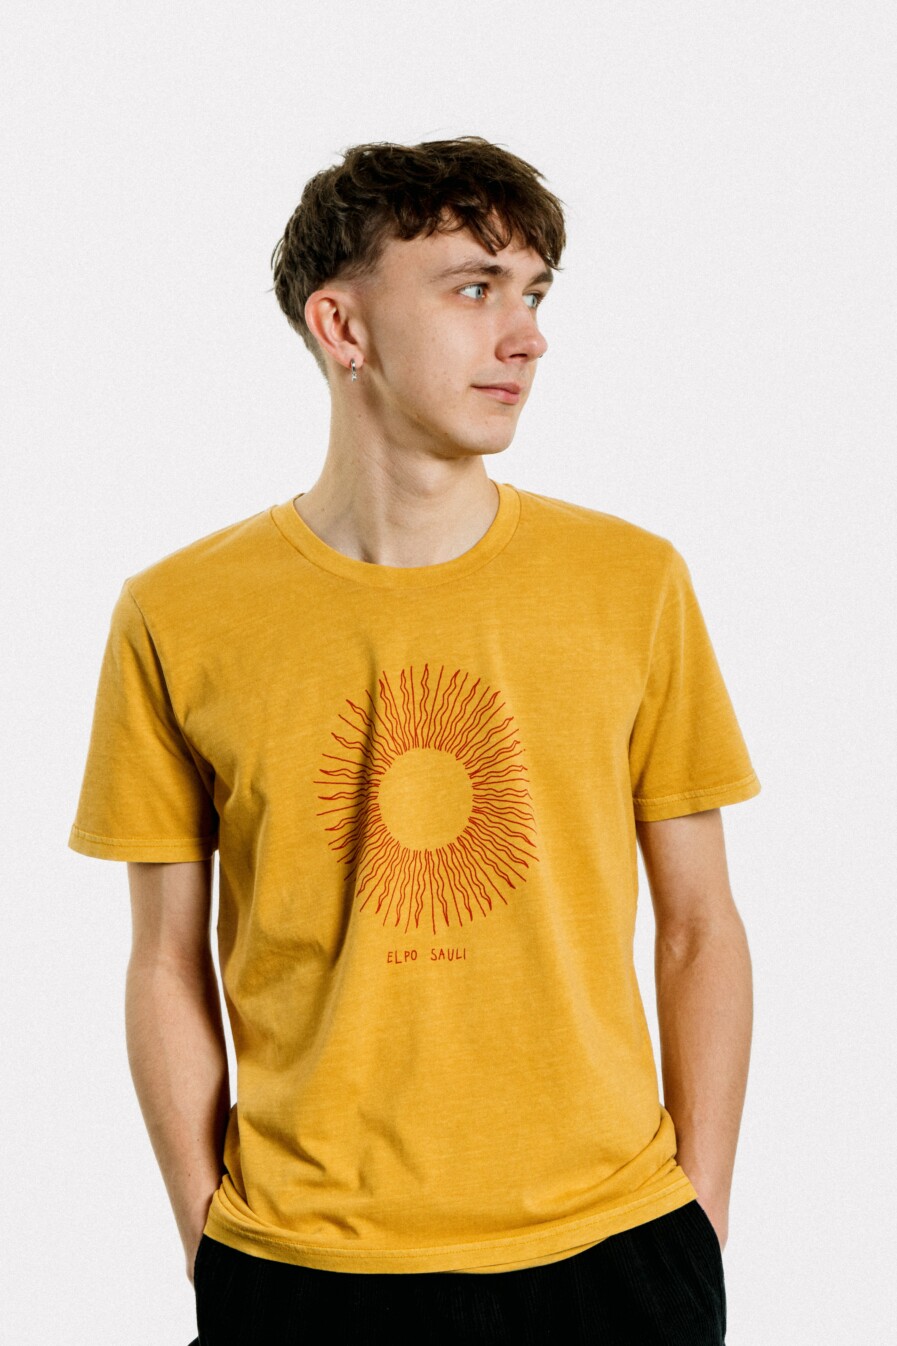 VairaViksne-t-shirt-t-krekls-unisex-yellow-dzeltens-elpo-sauli-kokvilna-1